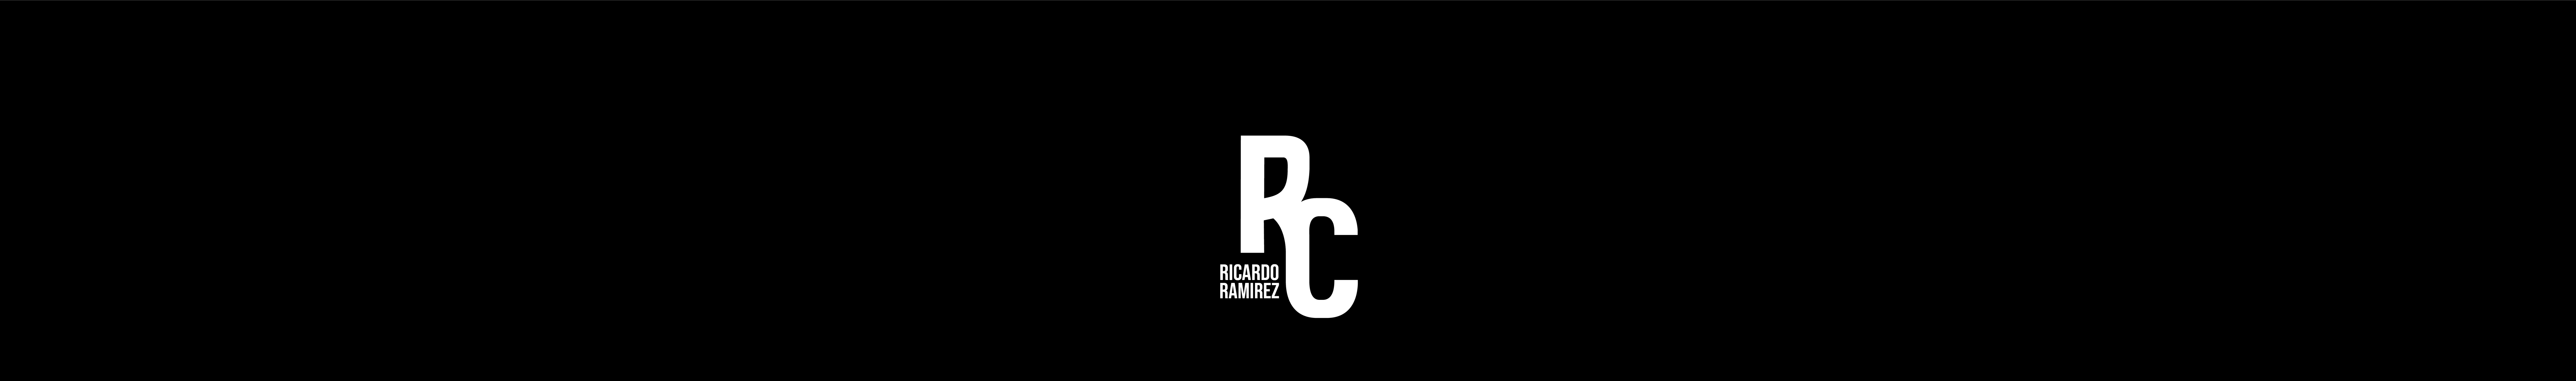 Ricardo Ramirezs profilbanner